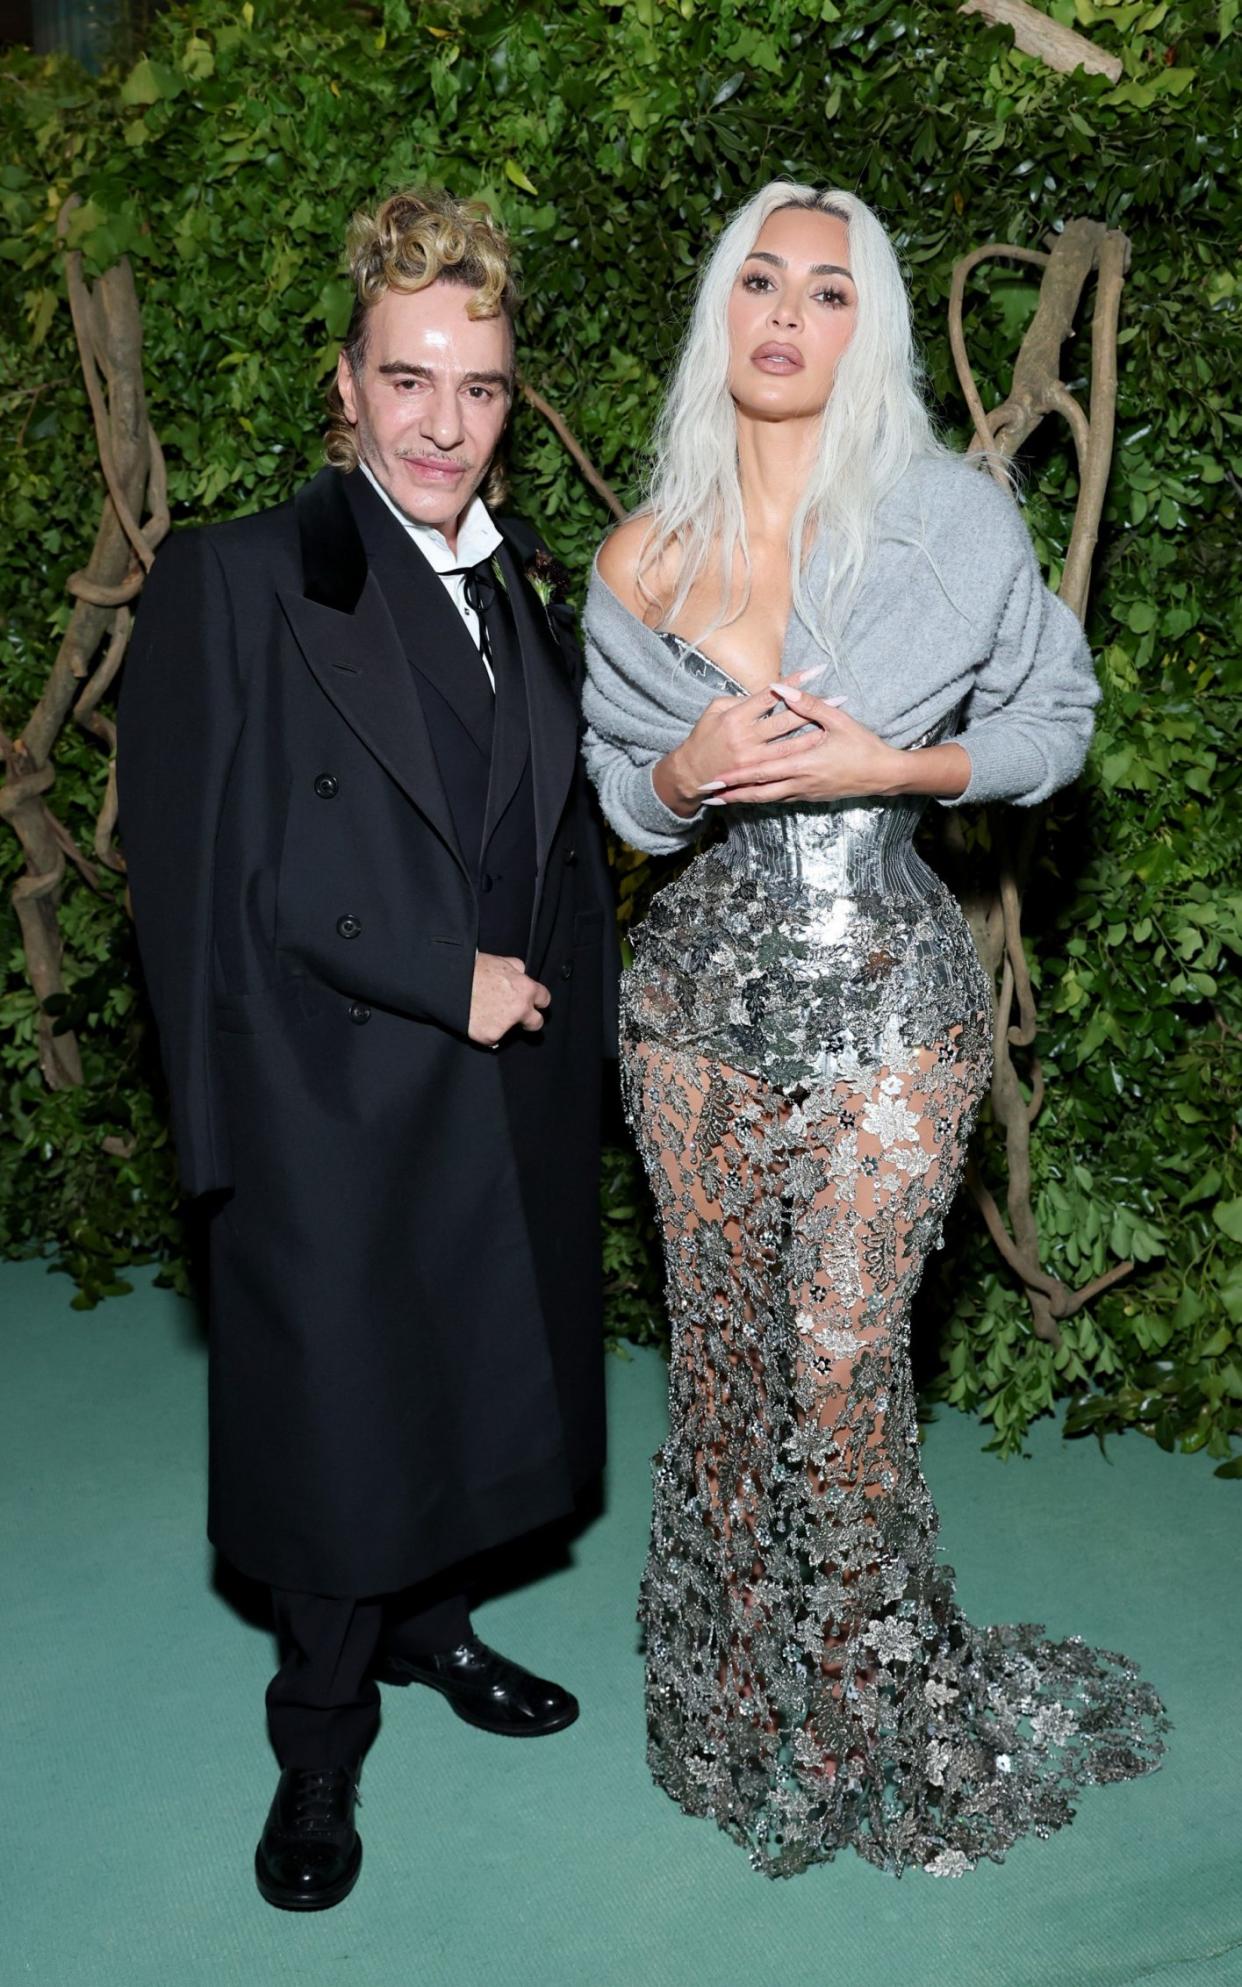 John Galliano made a brief appearence to pose alongside Kim Kardashian